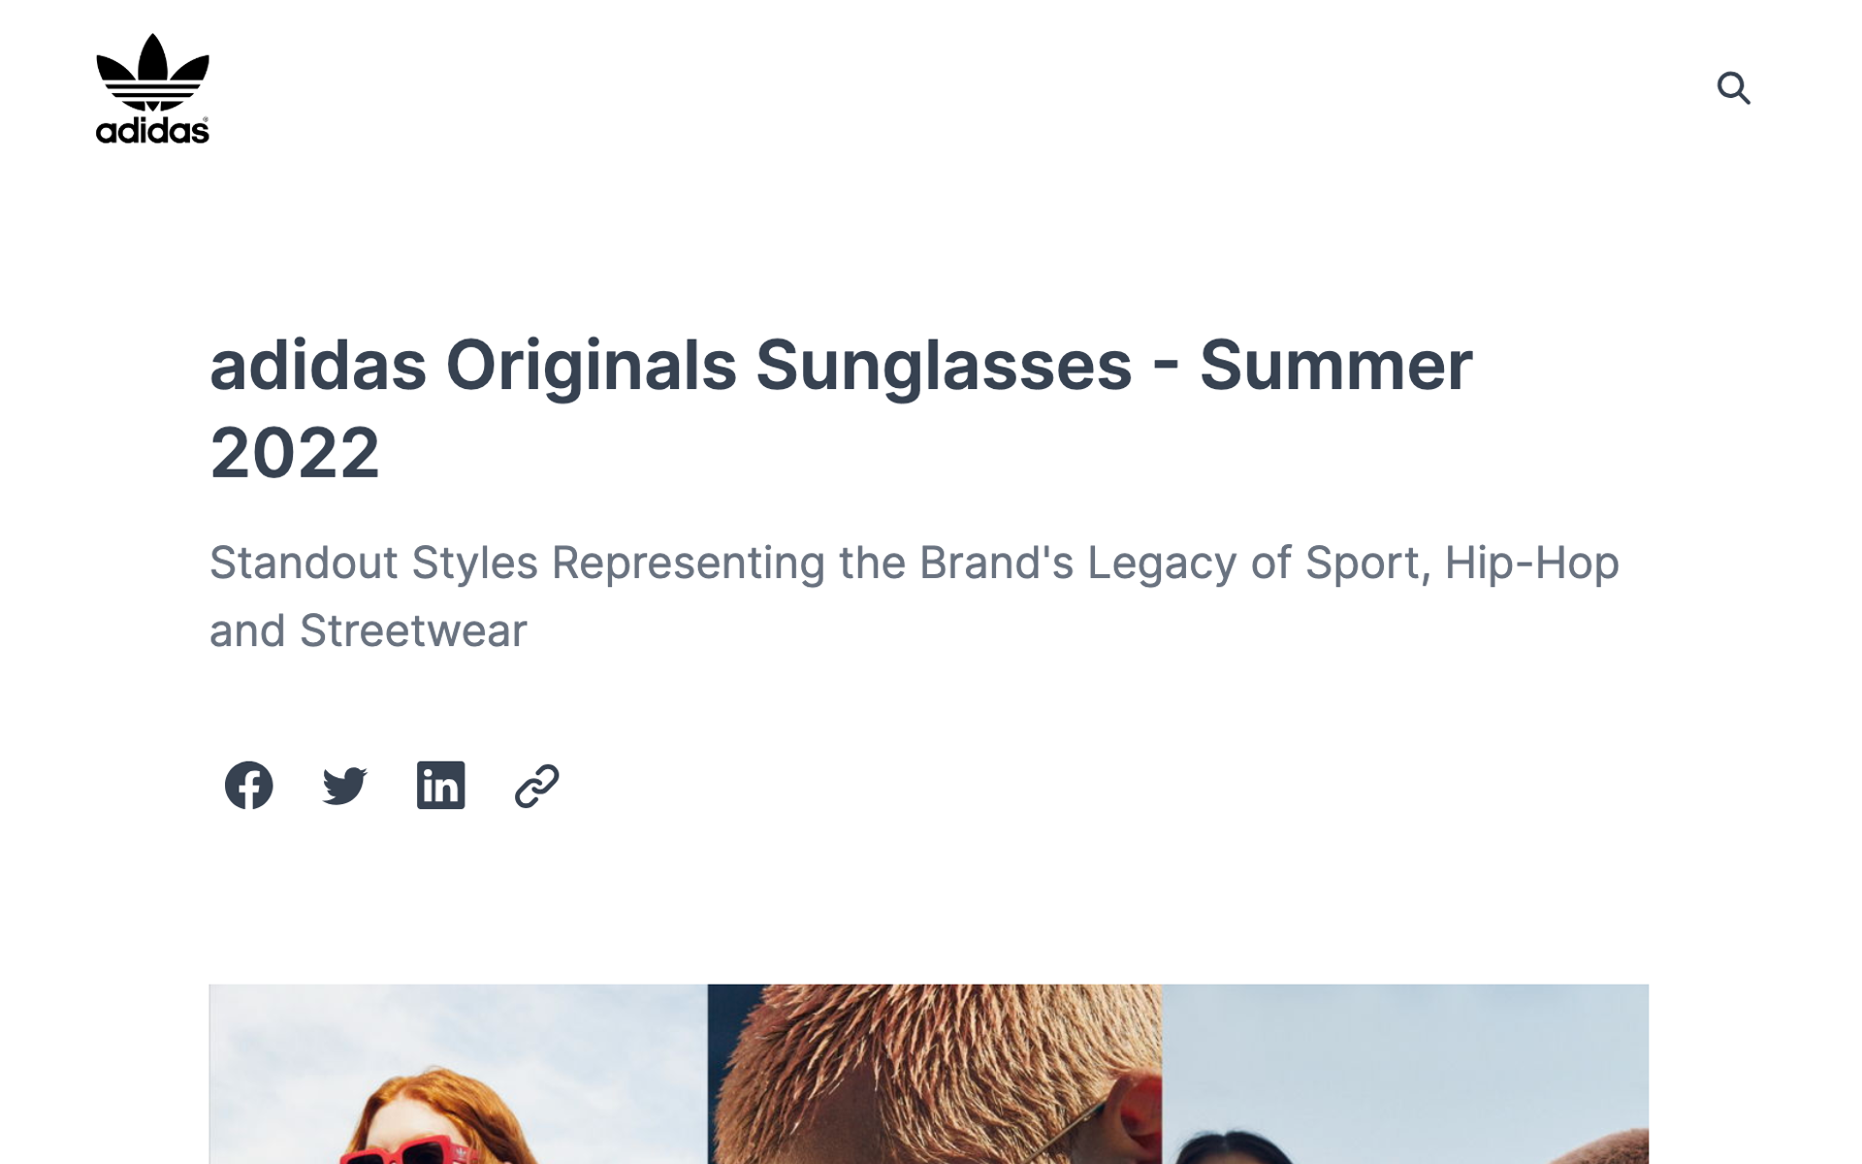 adidas Originals Sunglasses - Summer 2022